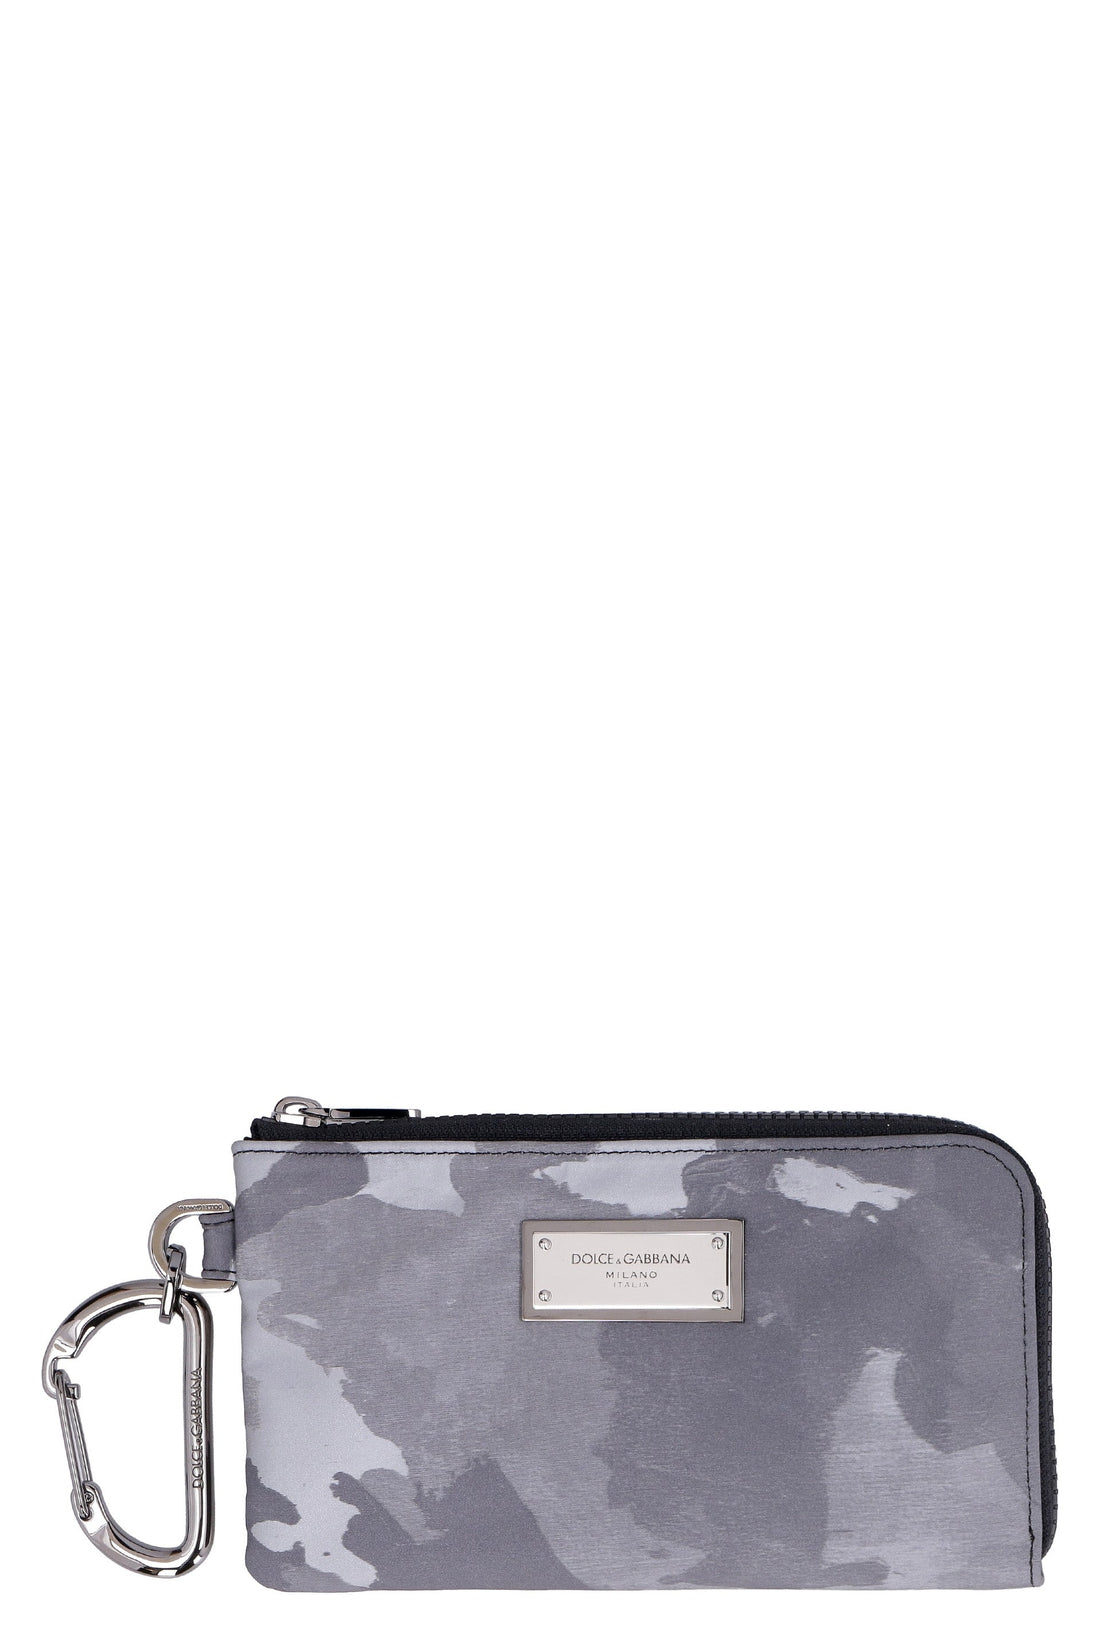 Dolce & Gabbana-OUTLET-SALE-Nylon pouch-bag with logo-ARCHIVIST